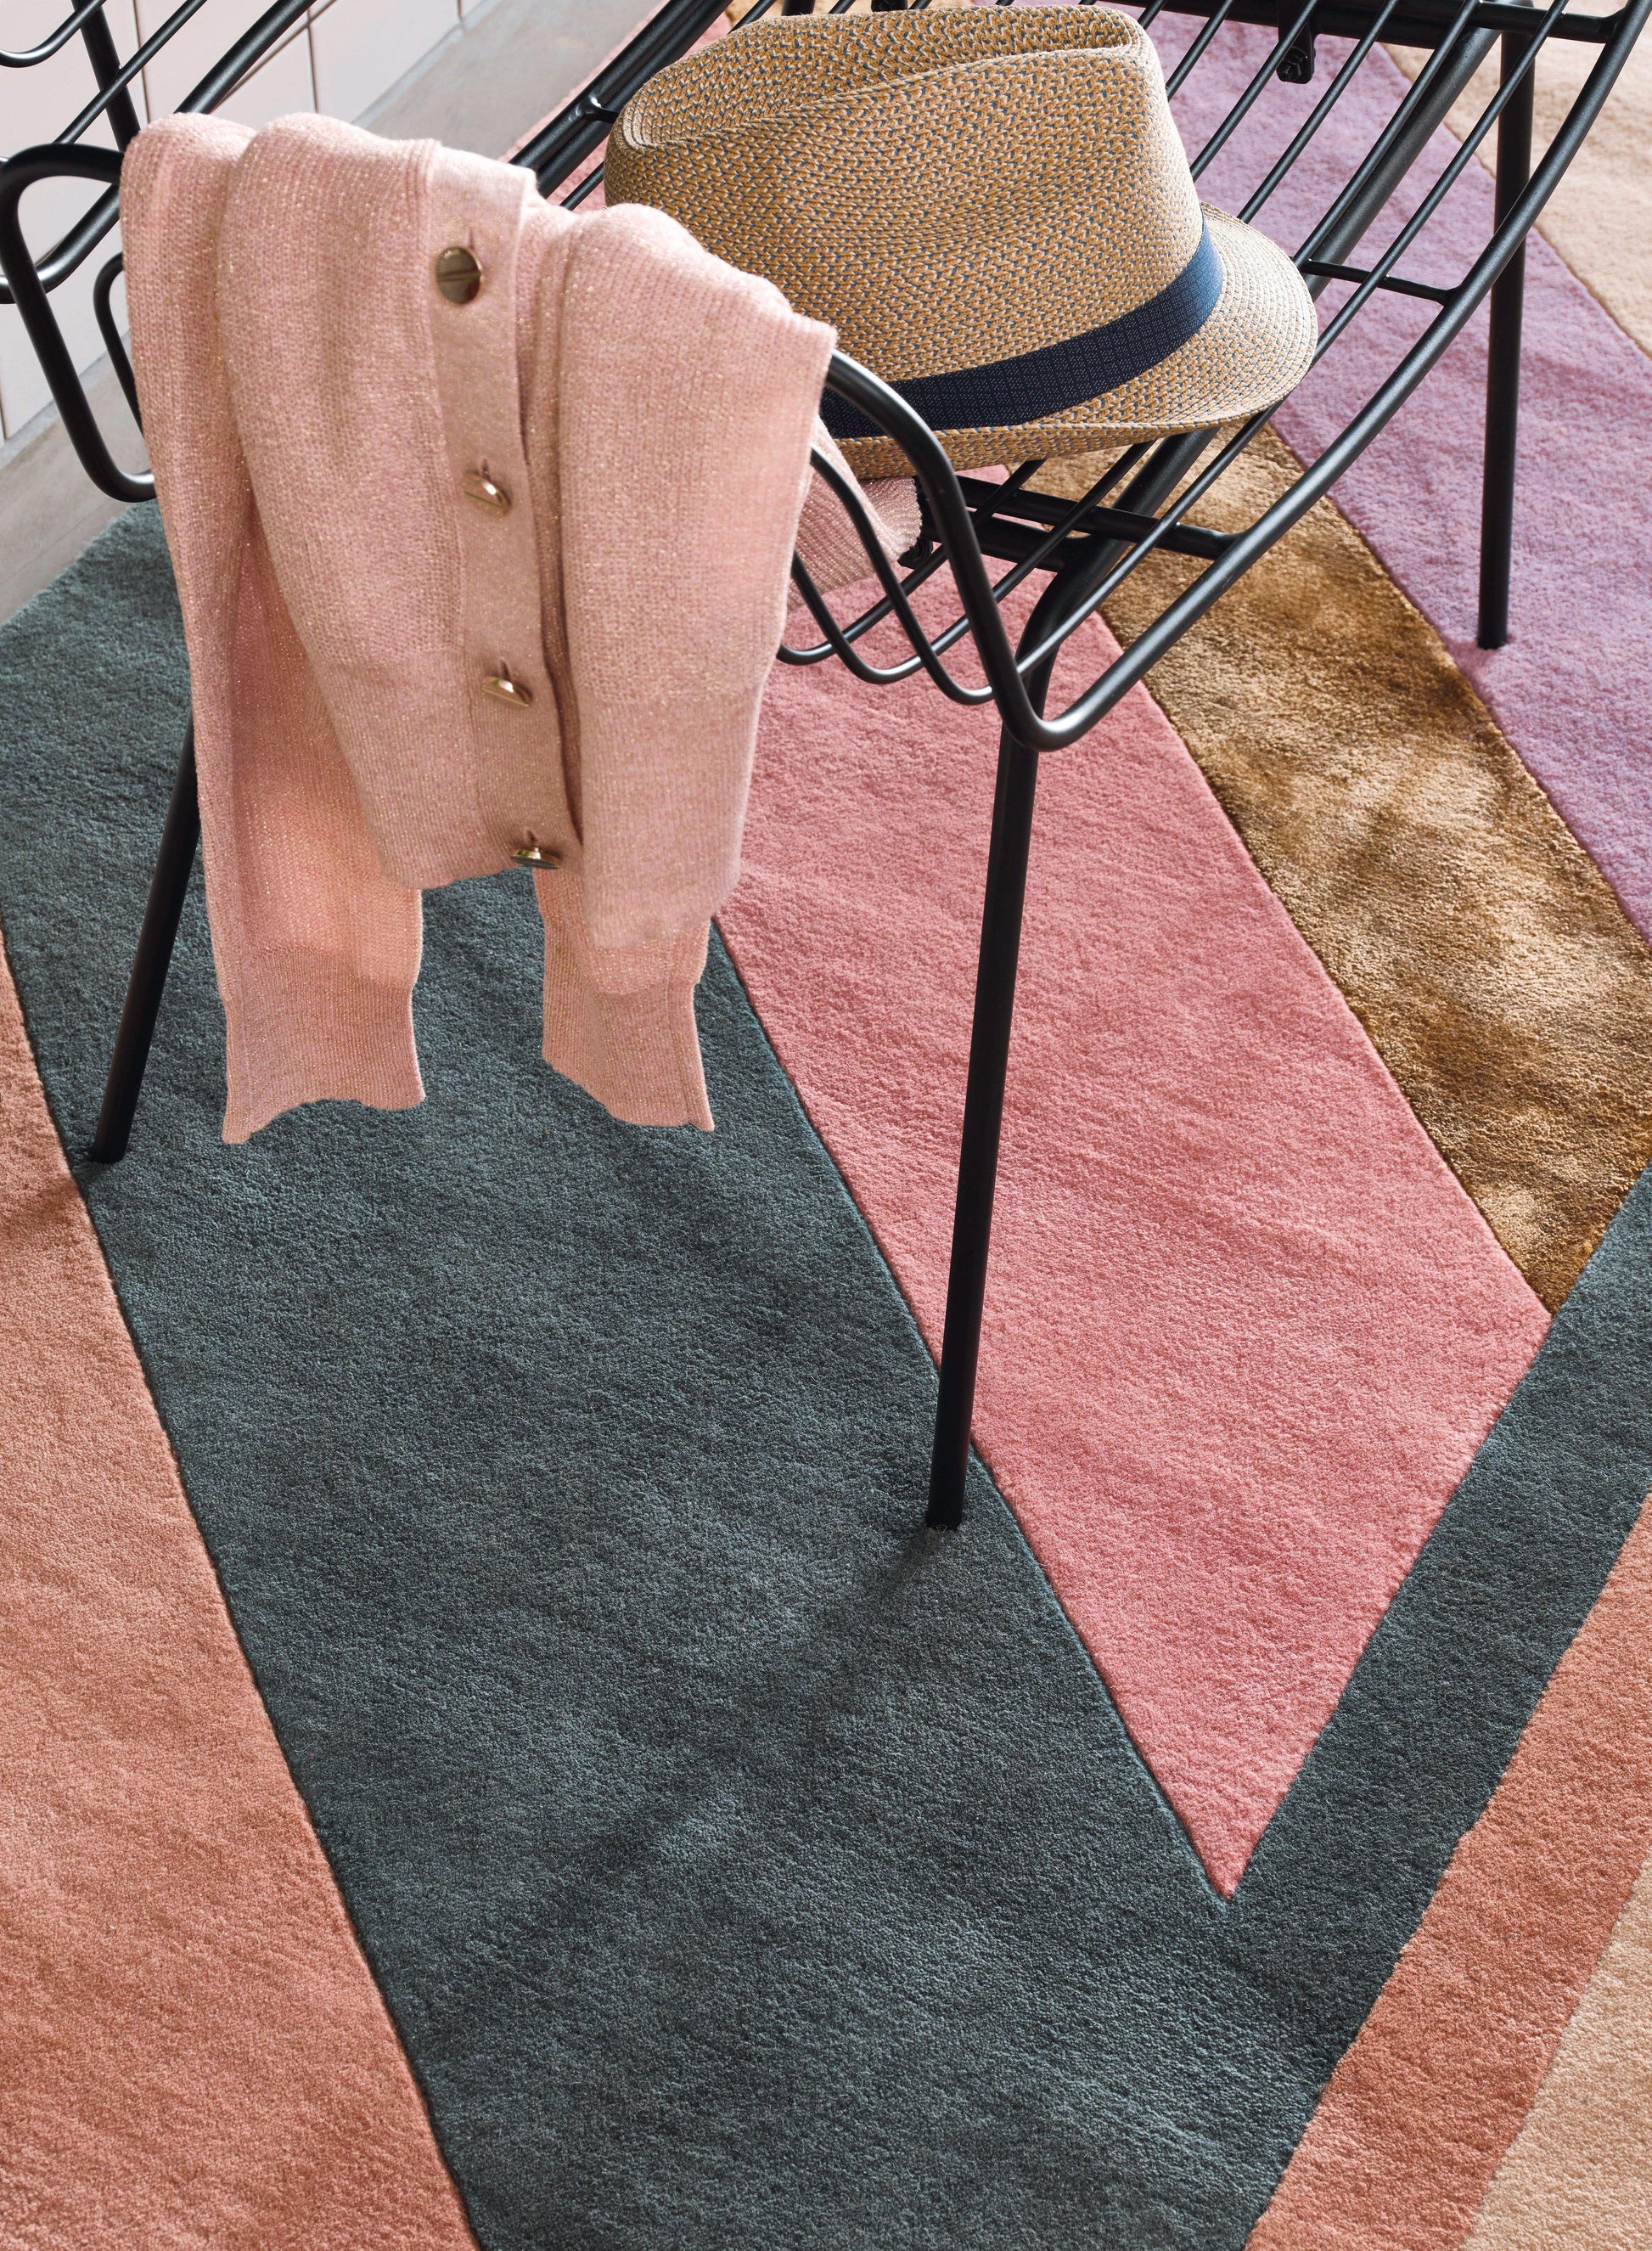 Ted Baker Jardin Pink 160902 - The Rug Loft rugs ireland